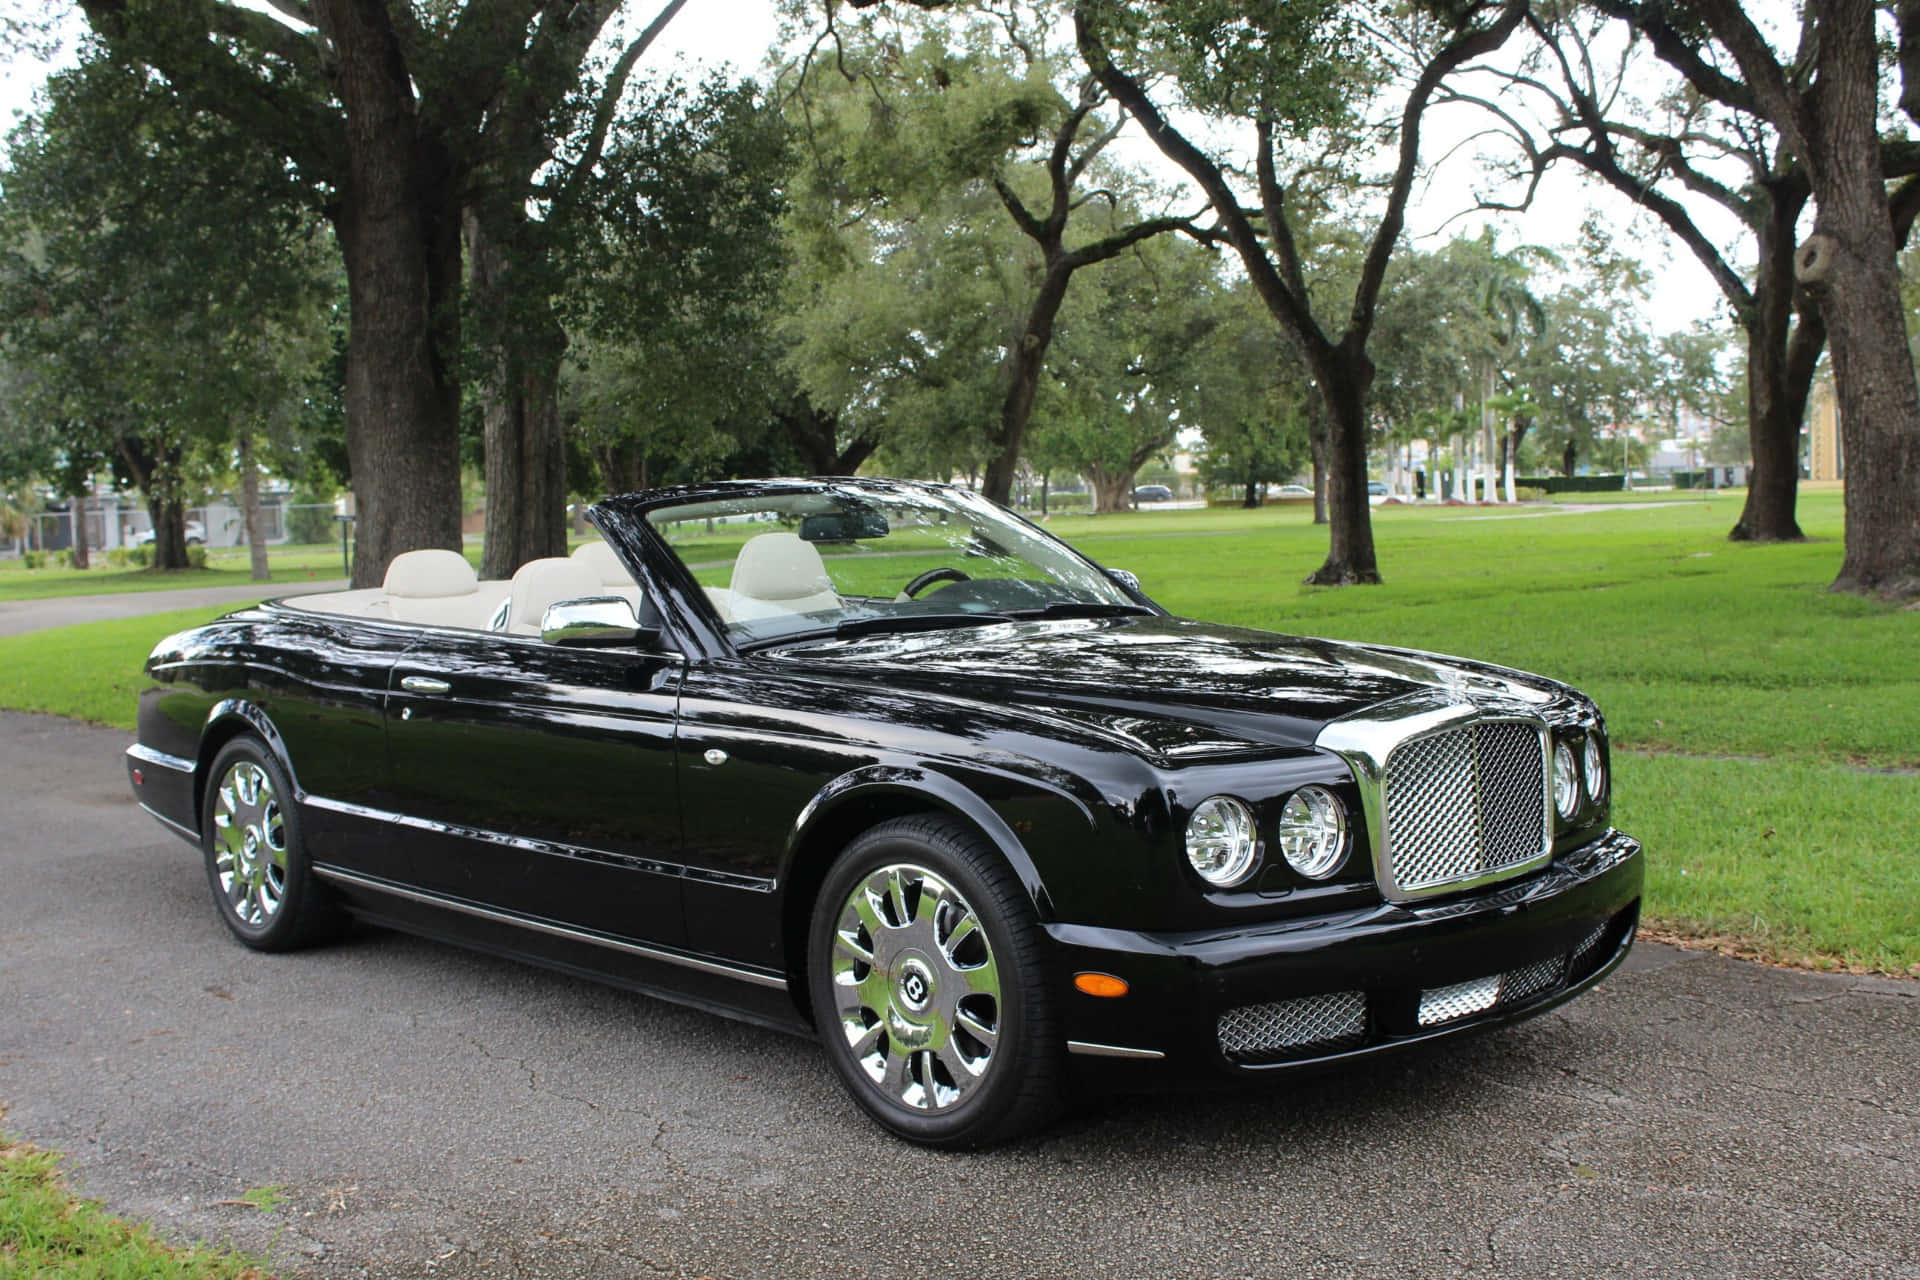 Erlebensie Den Luxus Eines Bentley